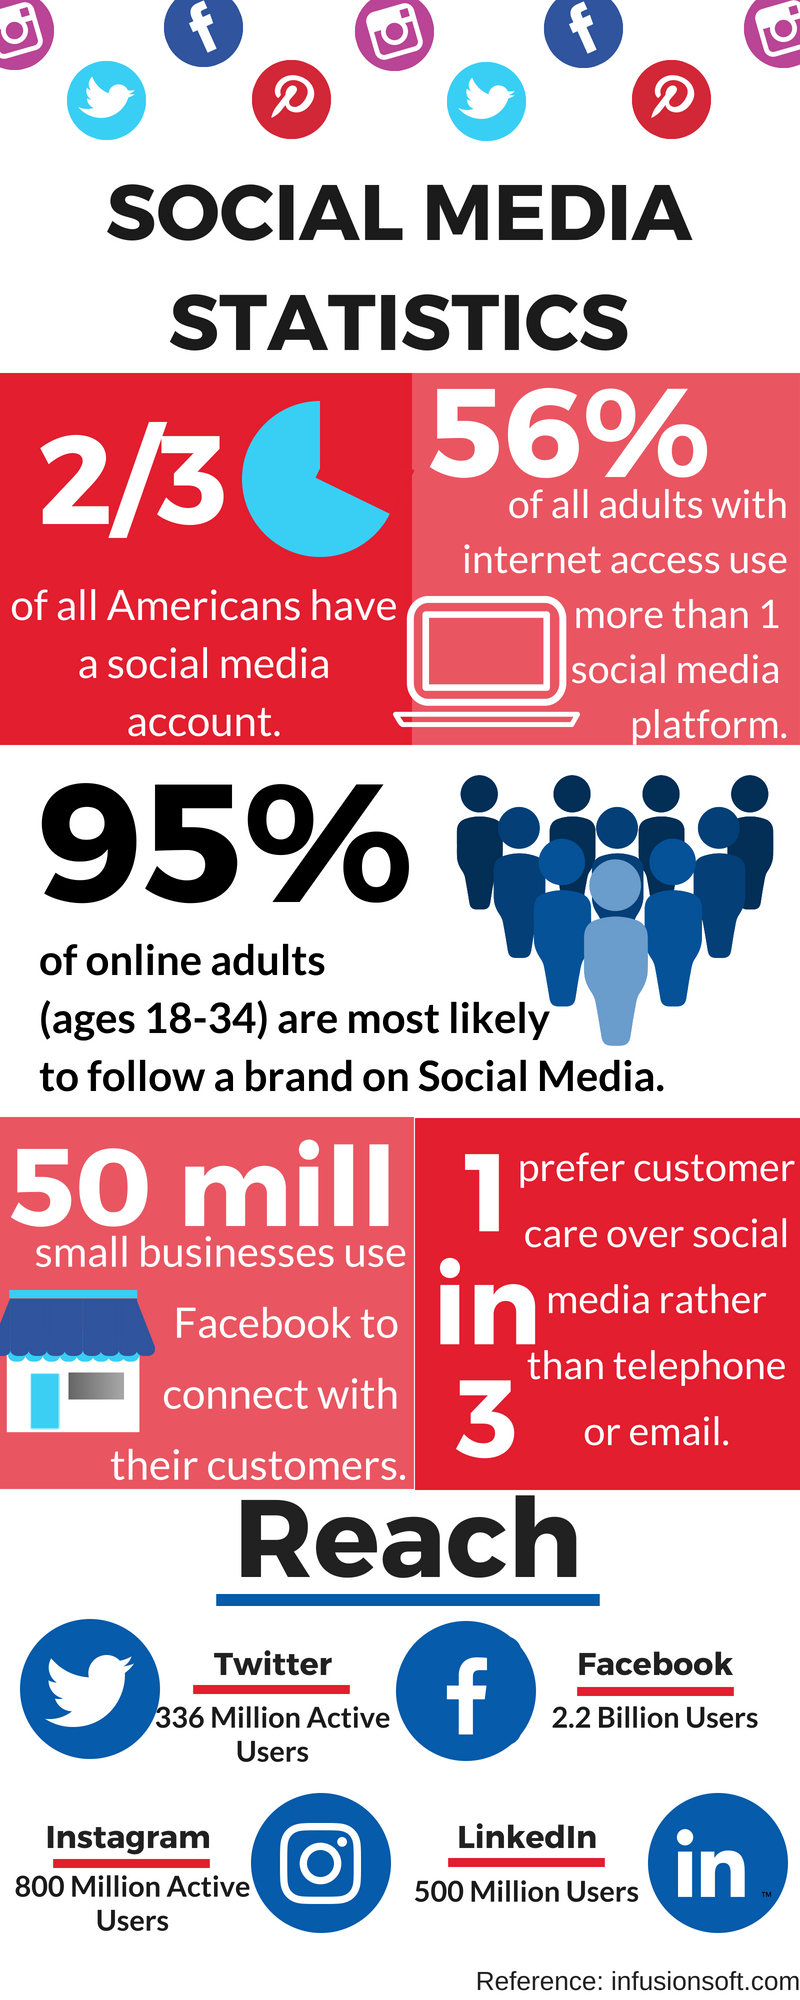 Social Media Marketing Statistics - Did You Know?